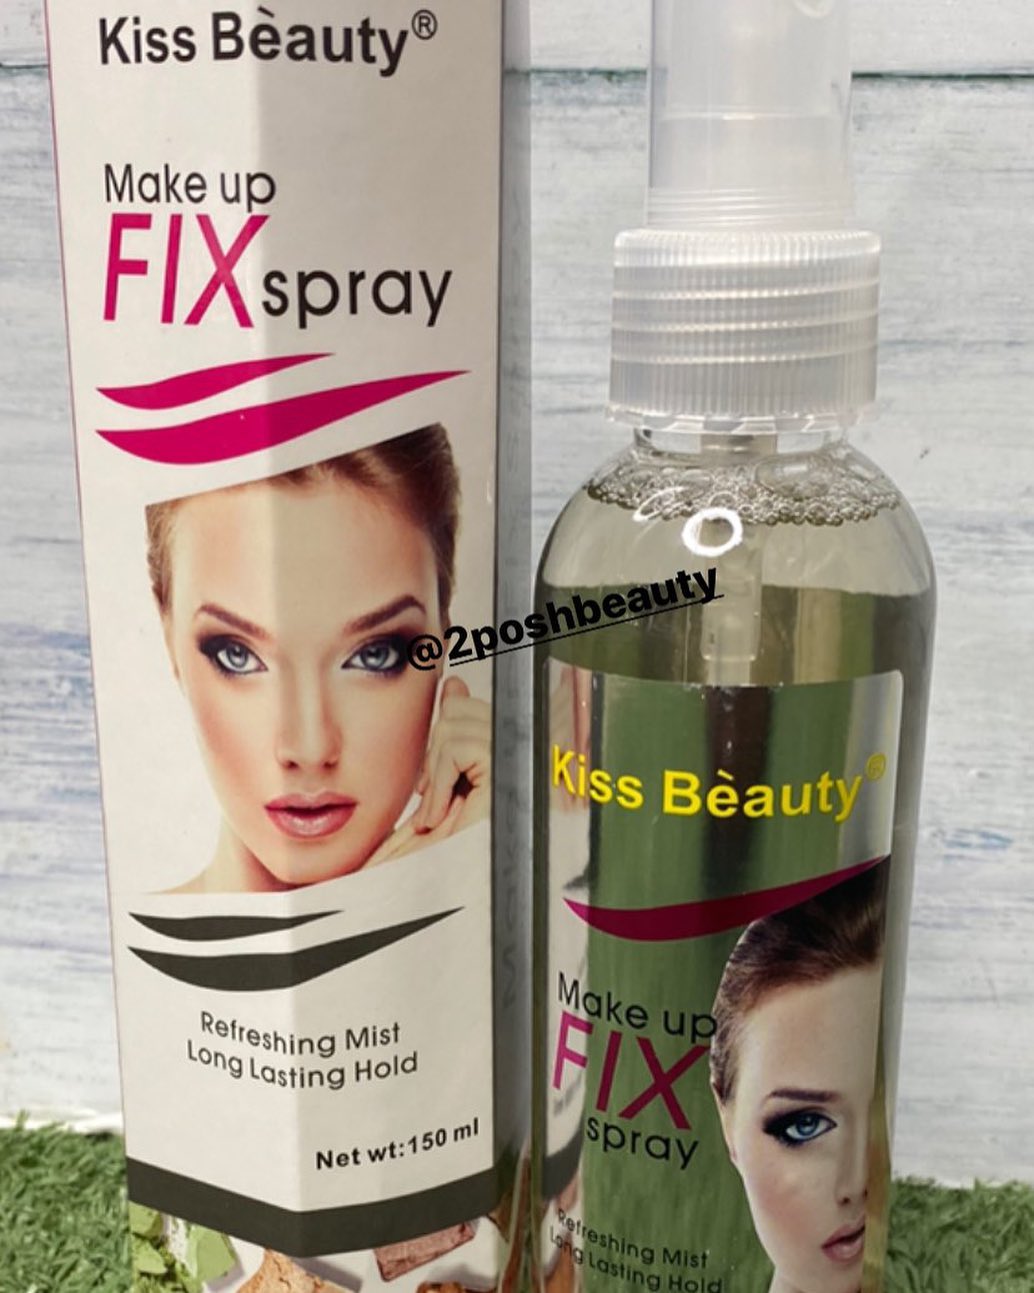 Kiss Beauty Fix Spray 2posh